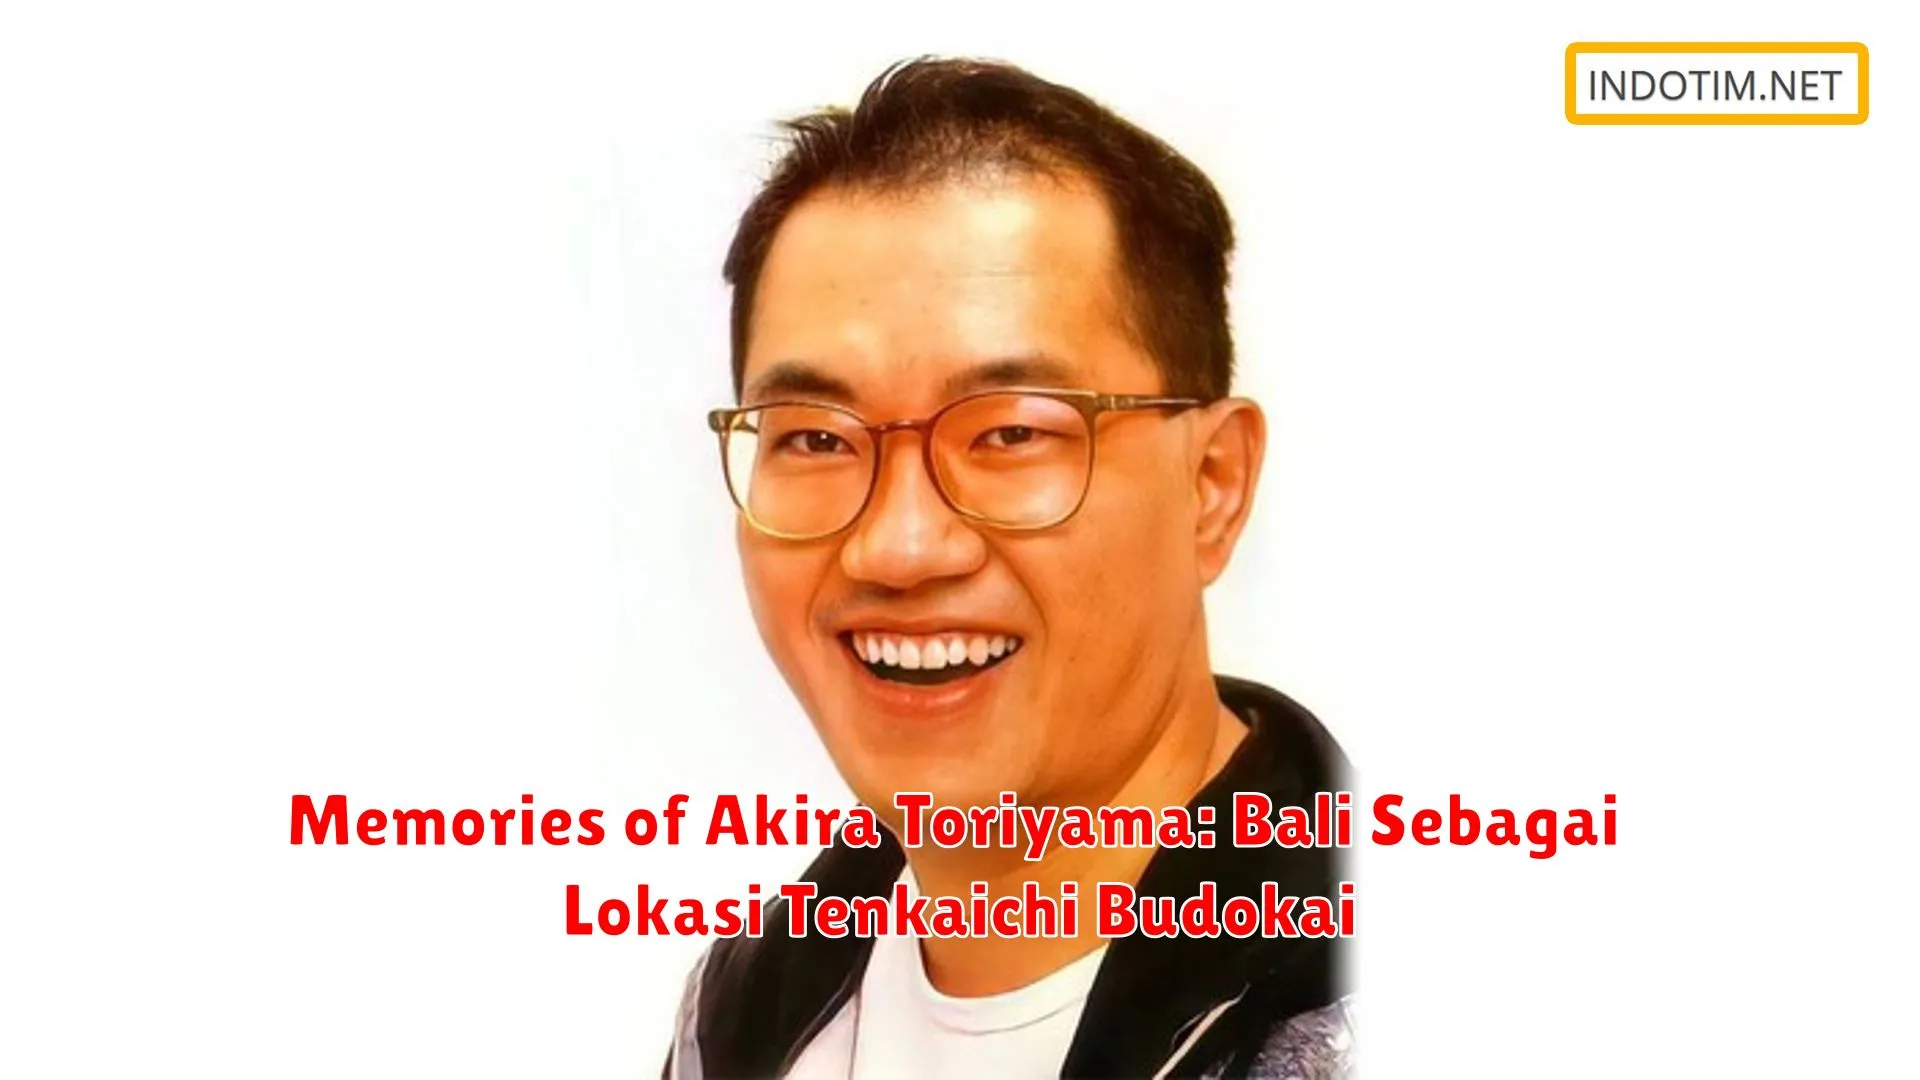 Memories of Akira Toriyama: Bali Sebagai Lokasi Tenkaichi Budokai